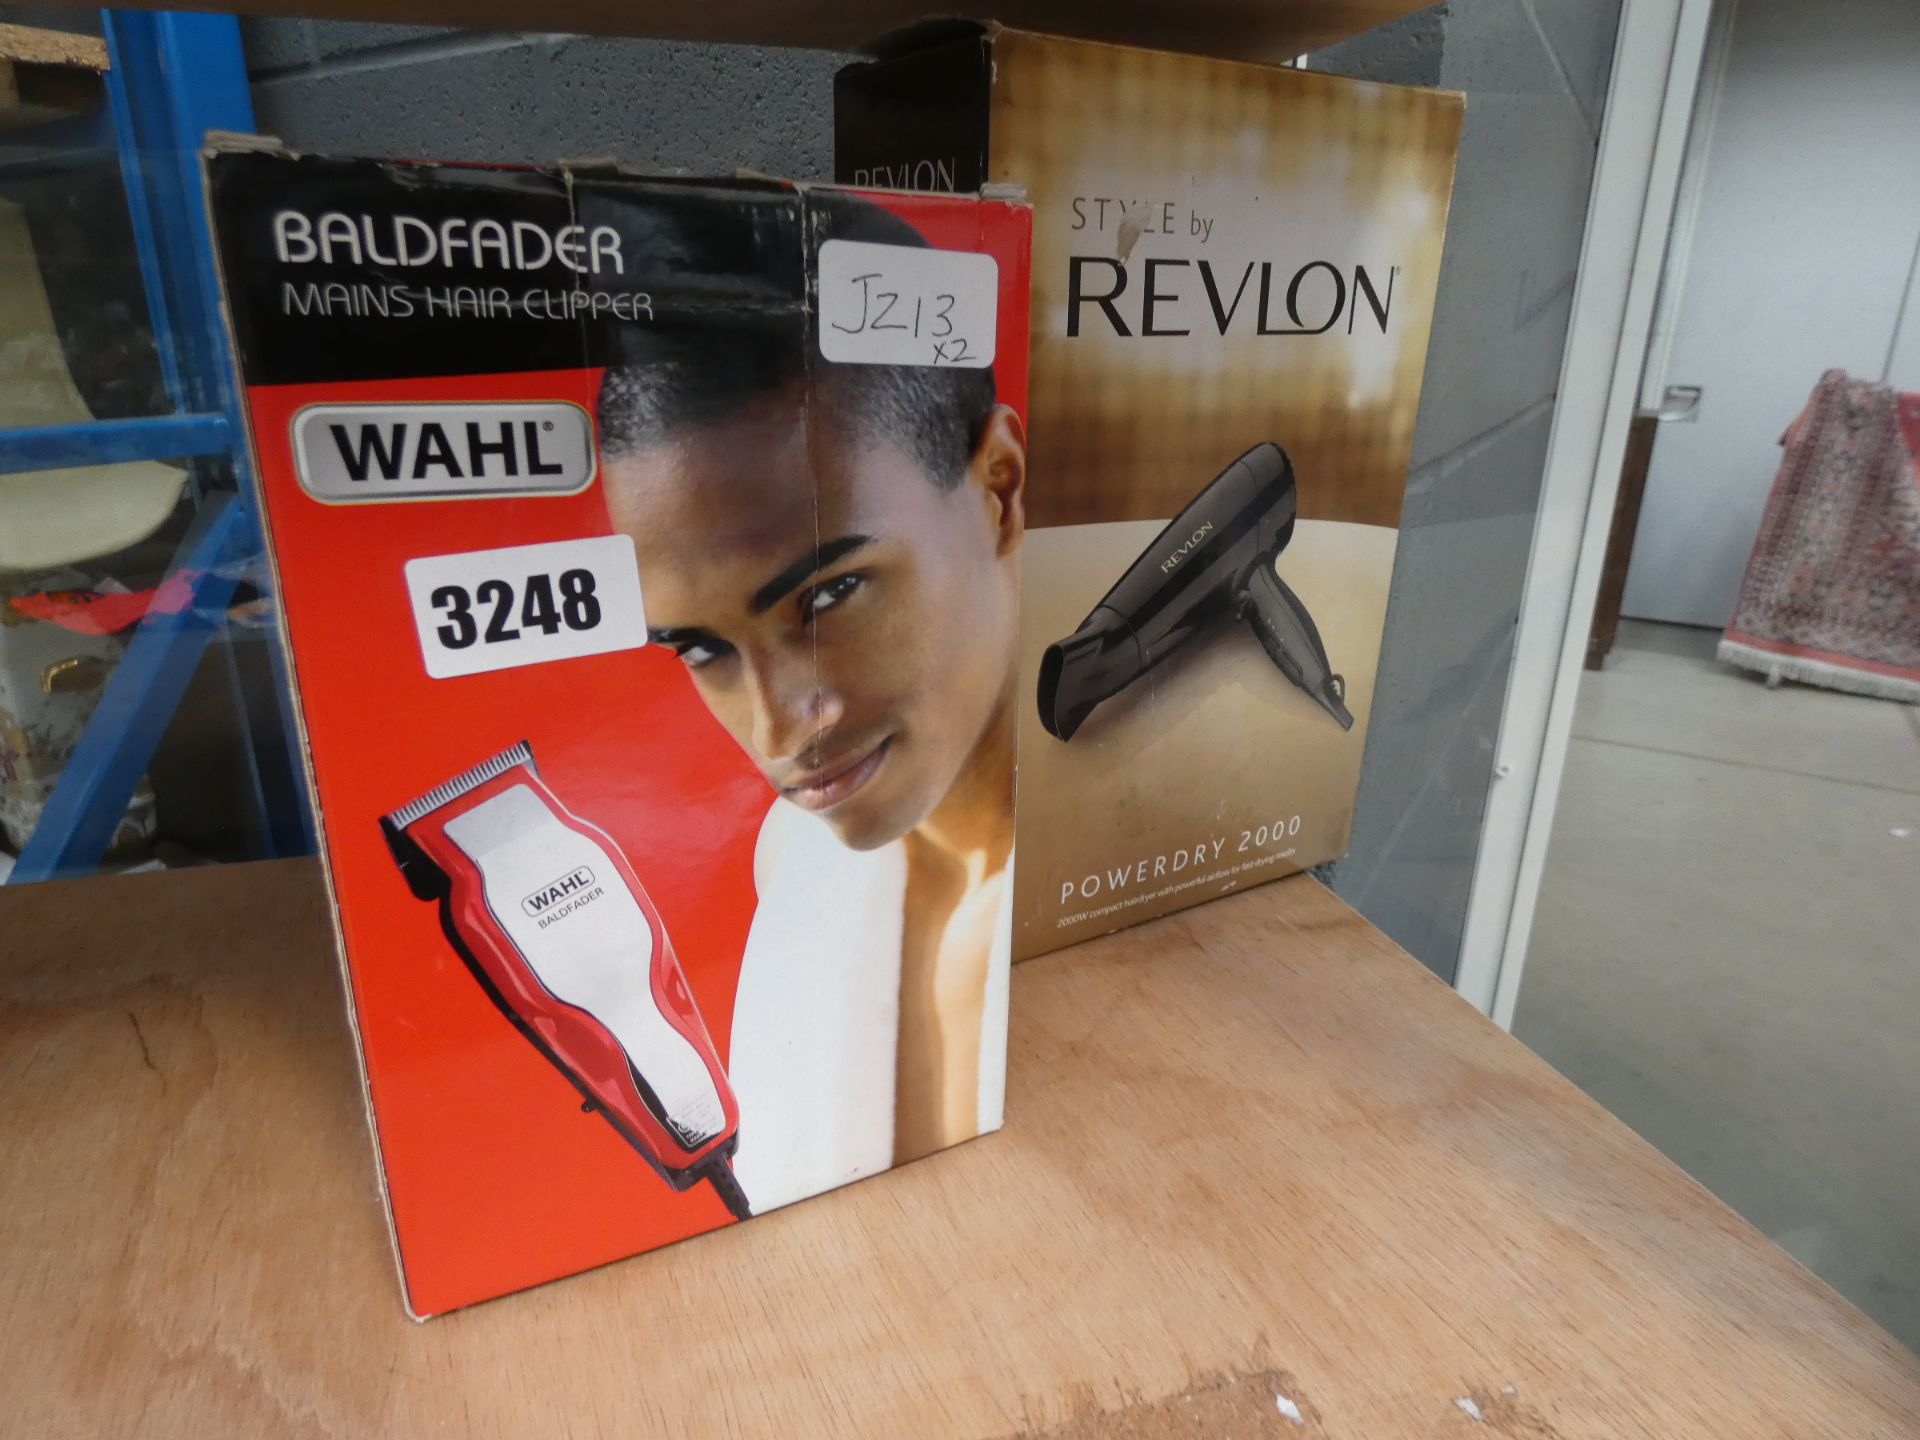 Wahl men's hair clipper plus Revlon hair dryer